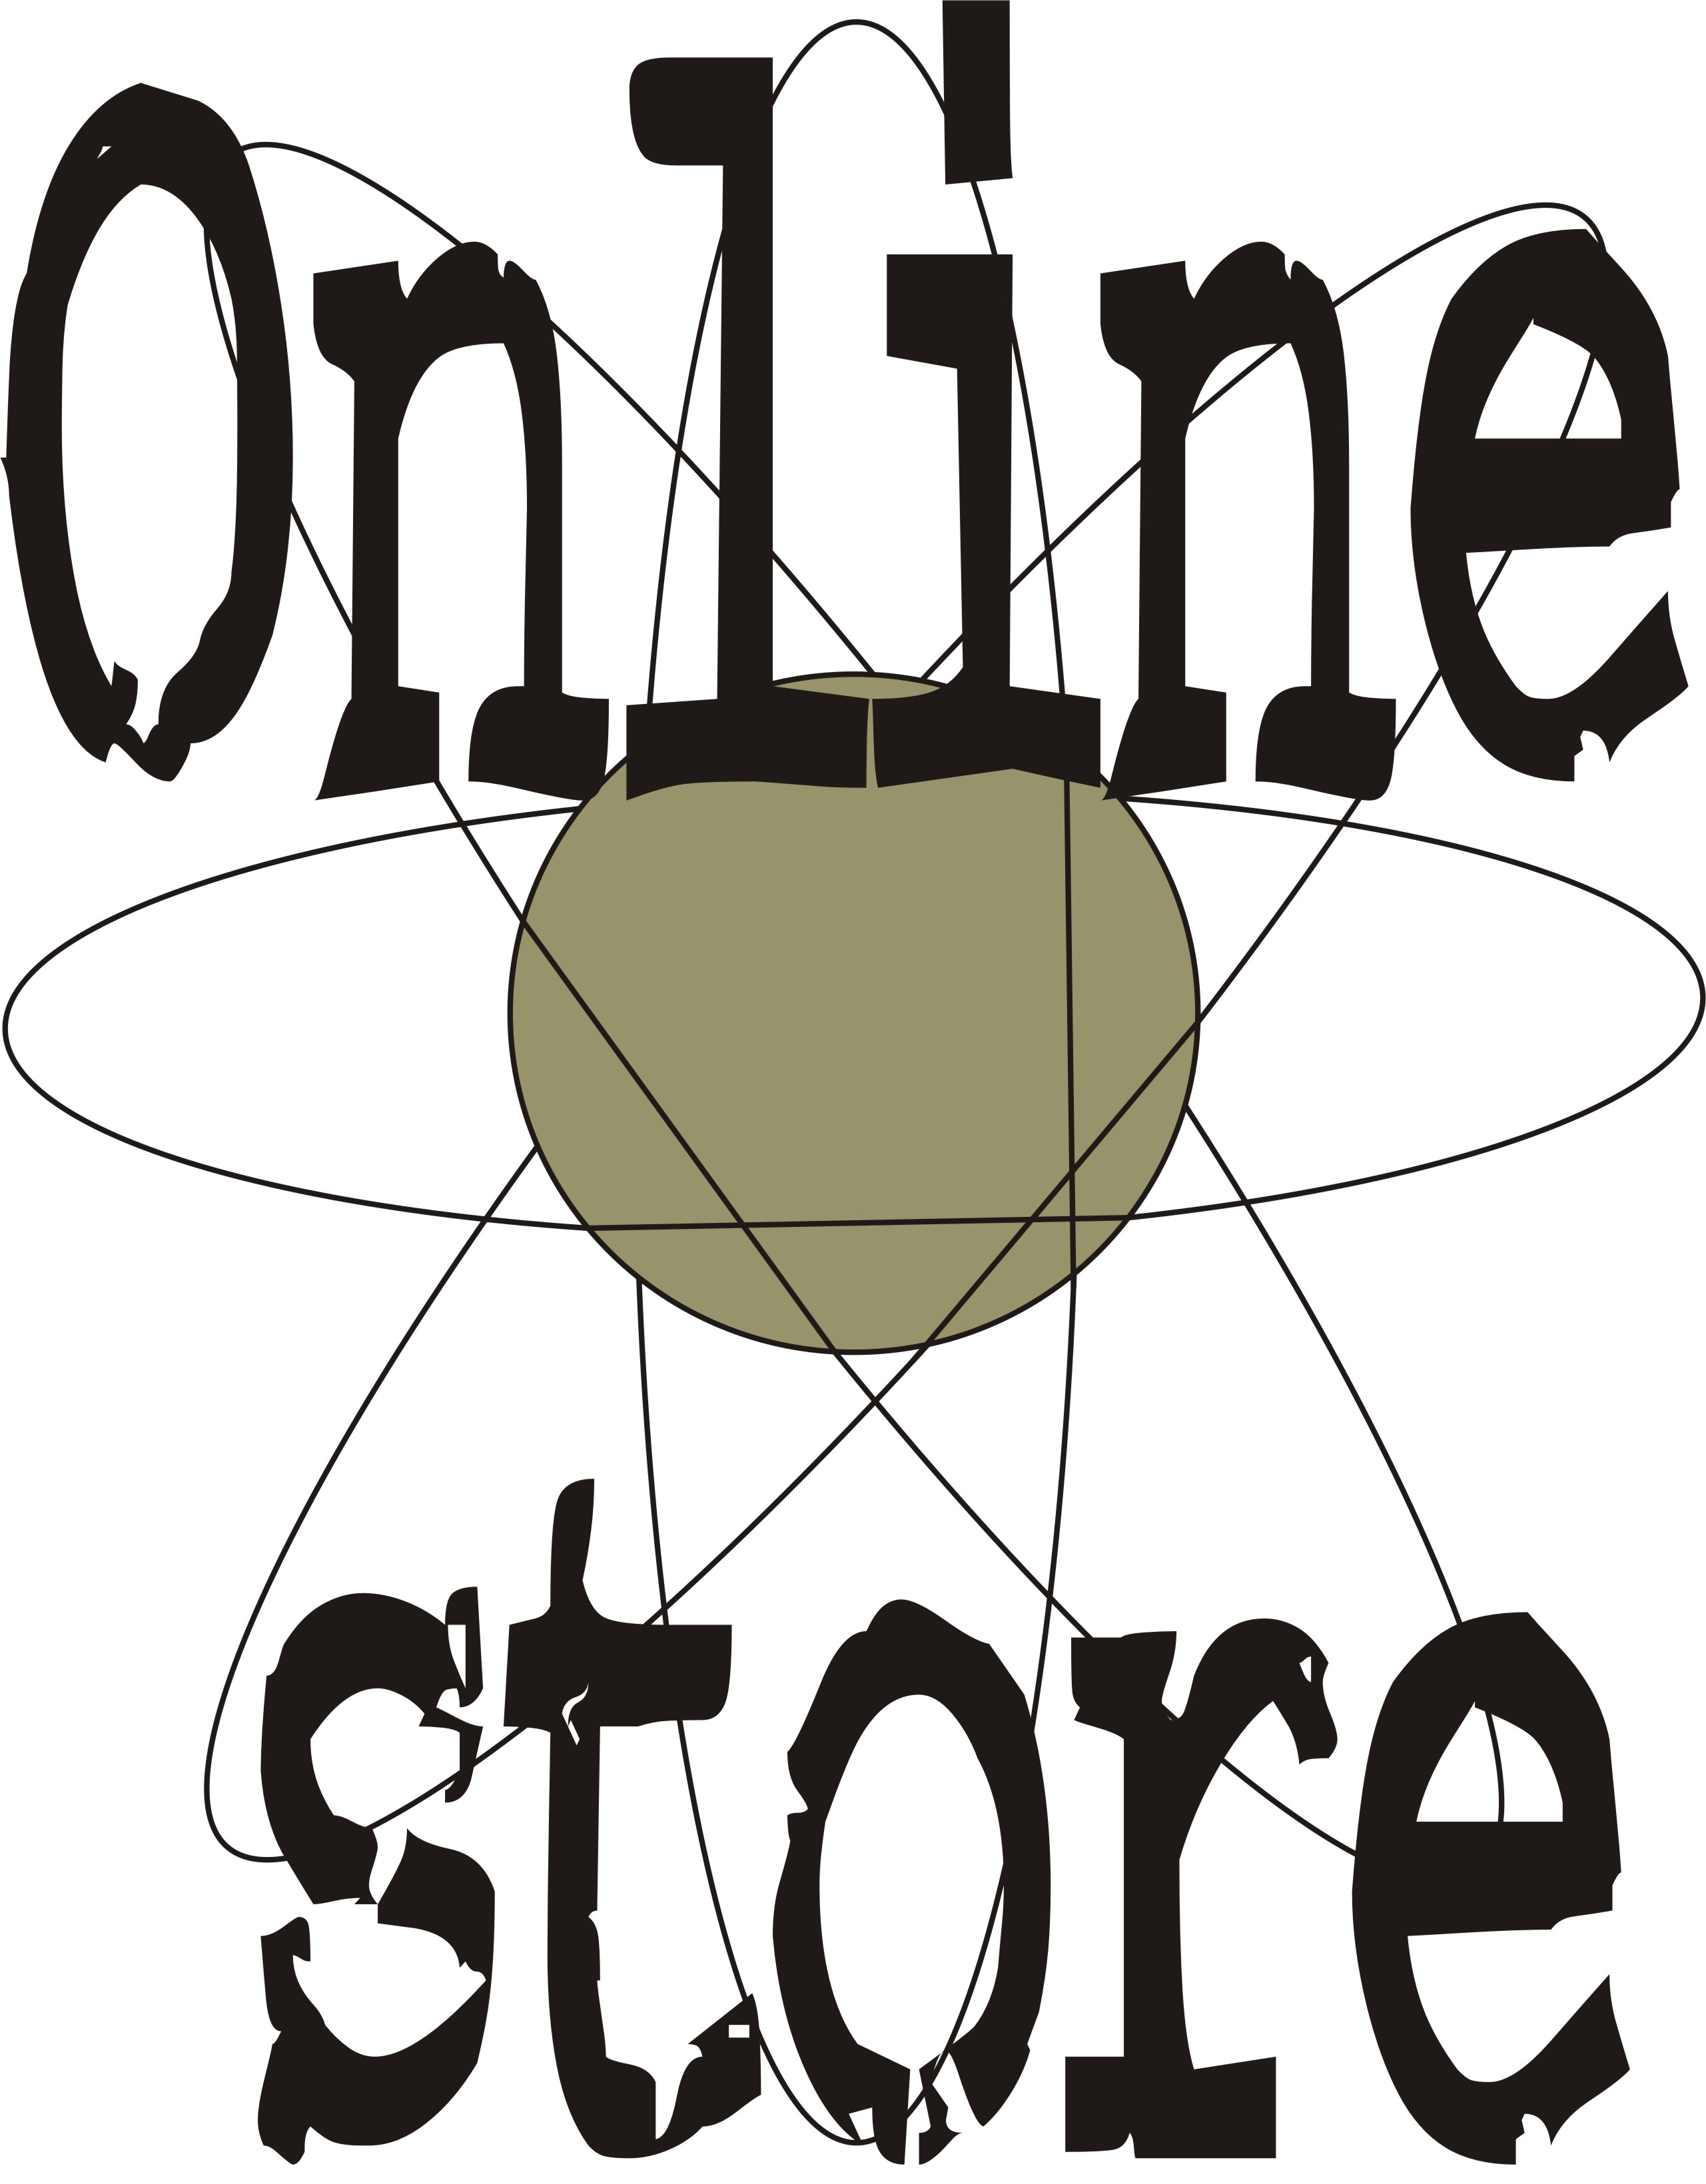 online store gateway